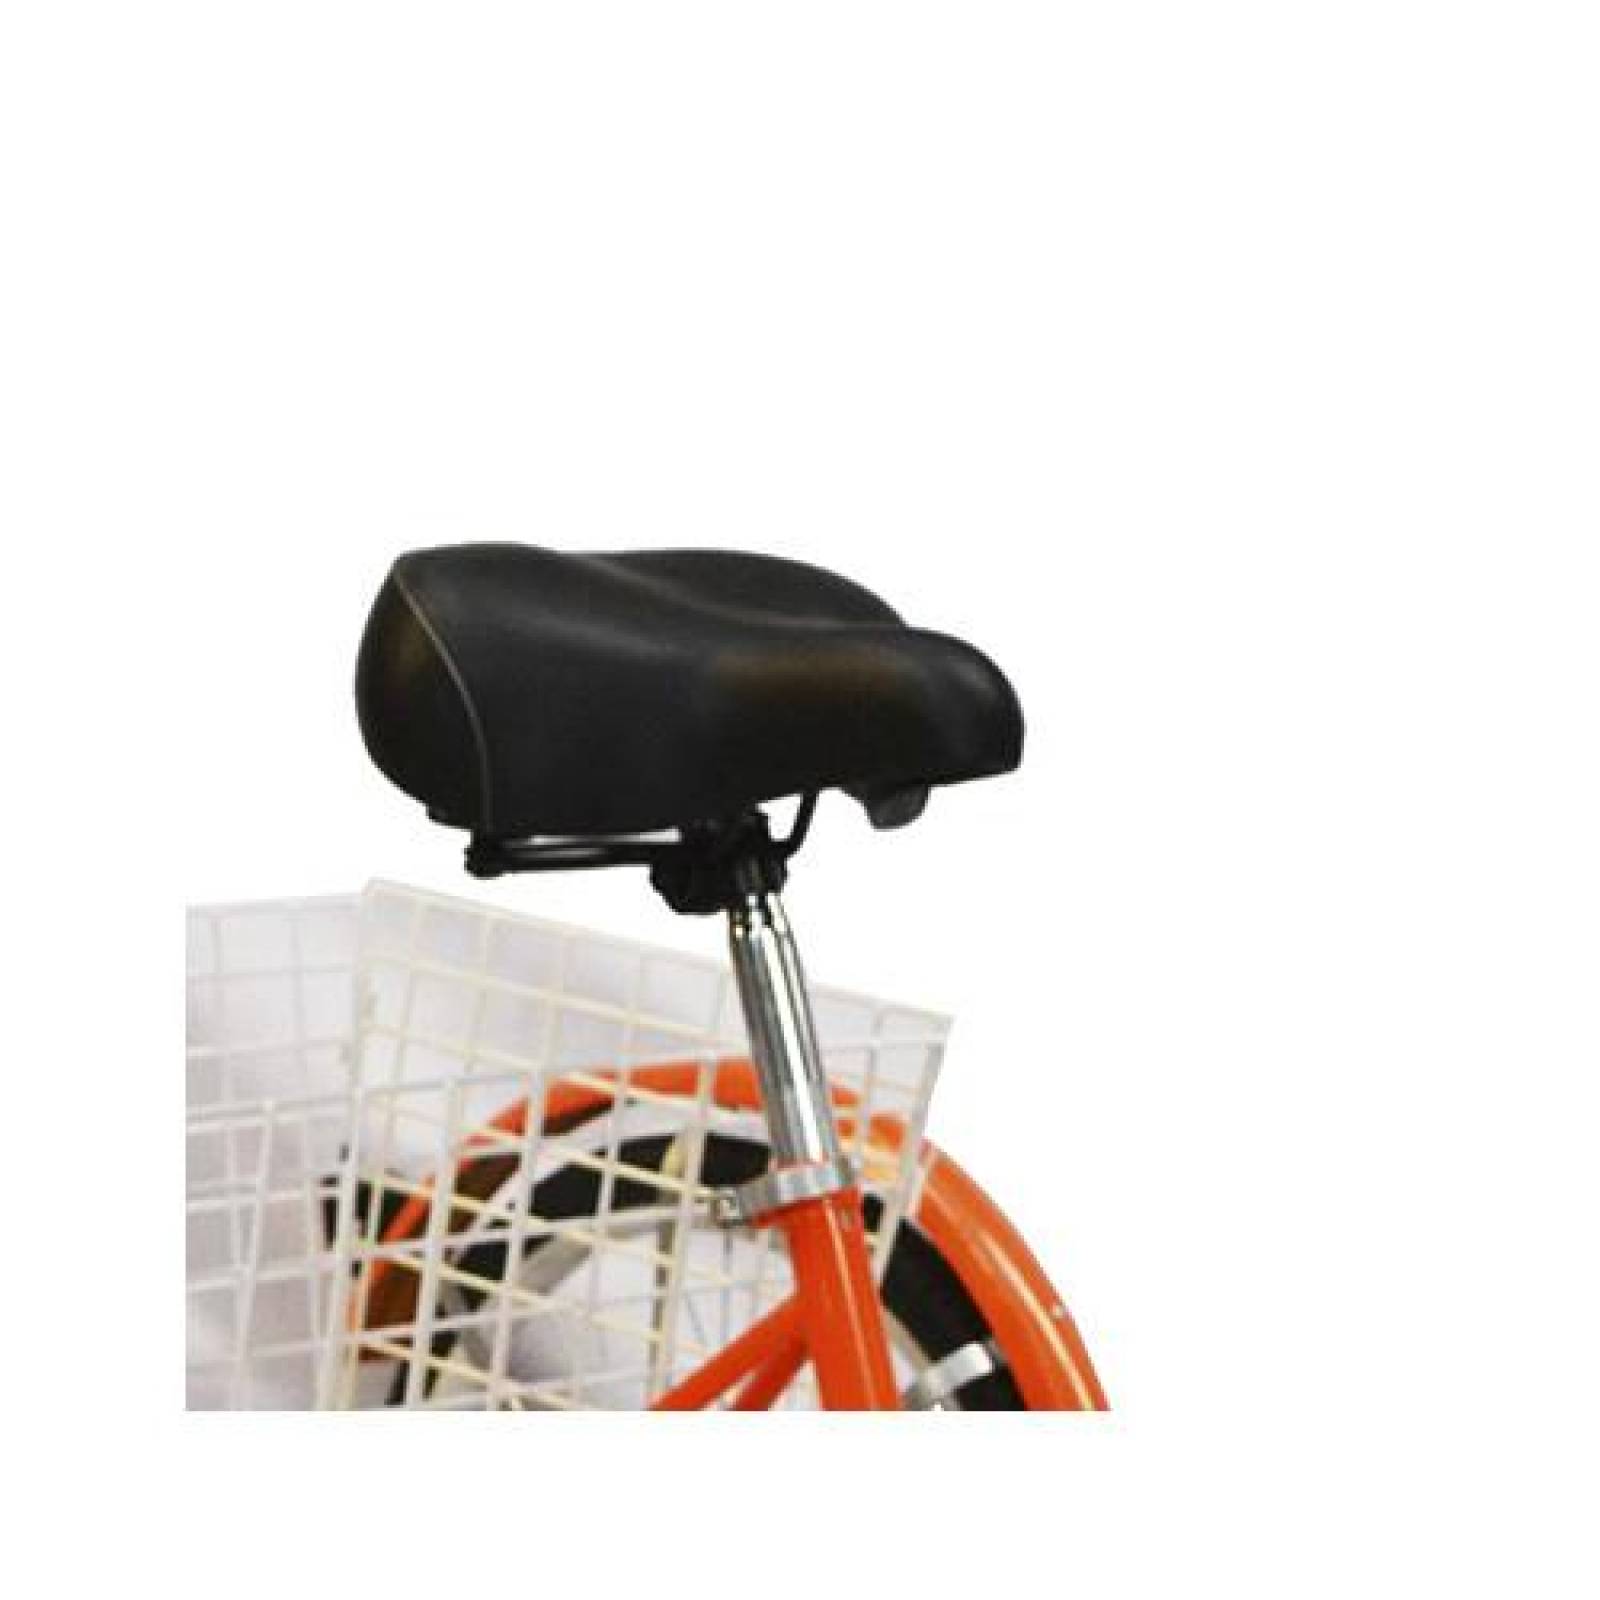 Tricicleta R24 1 Velocidad Canasta Trasera Naranja 